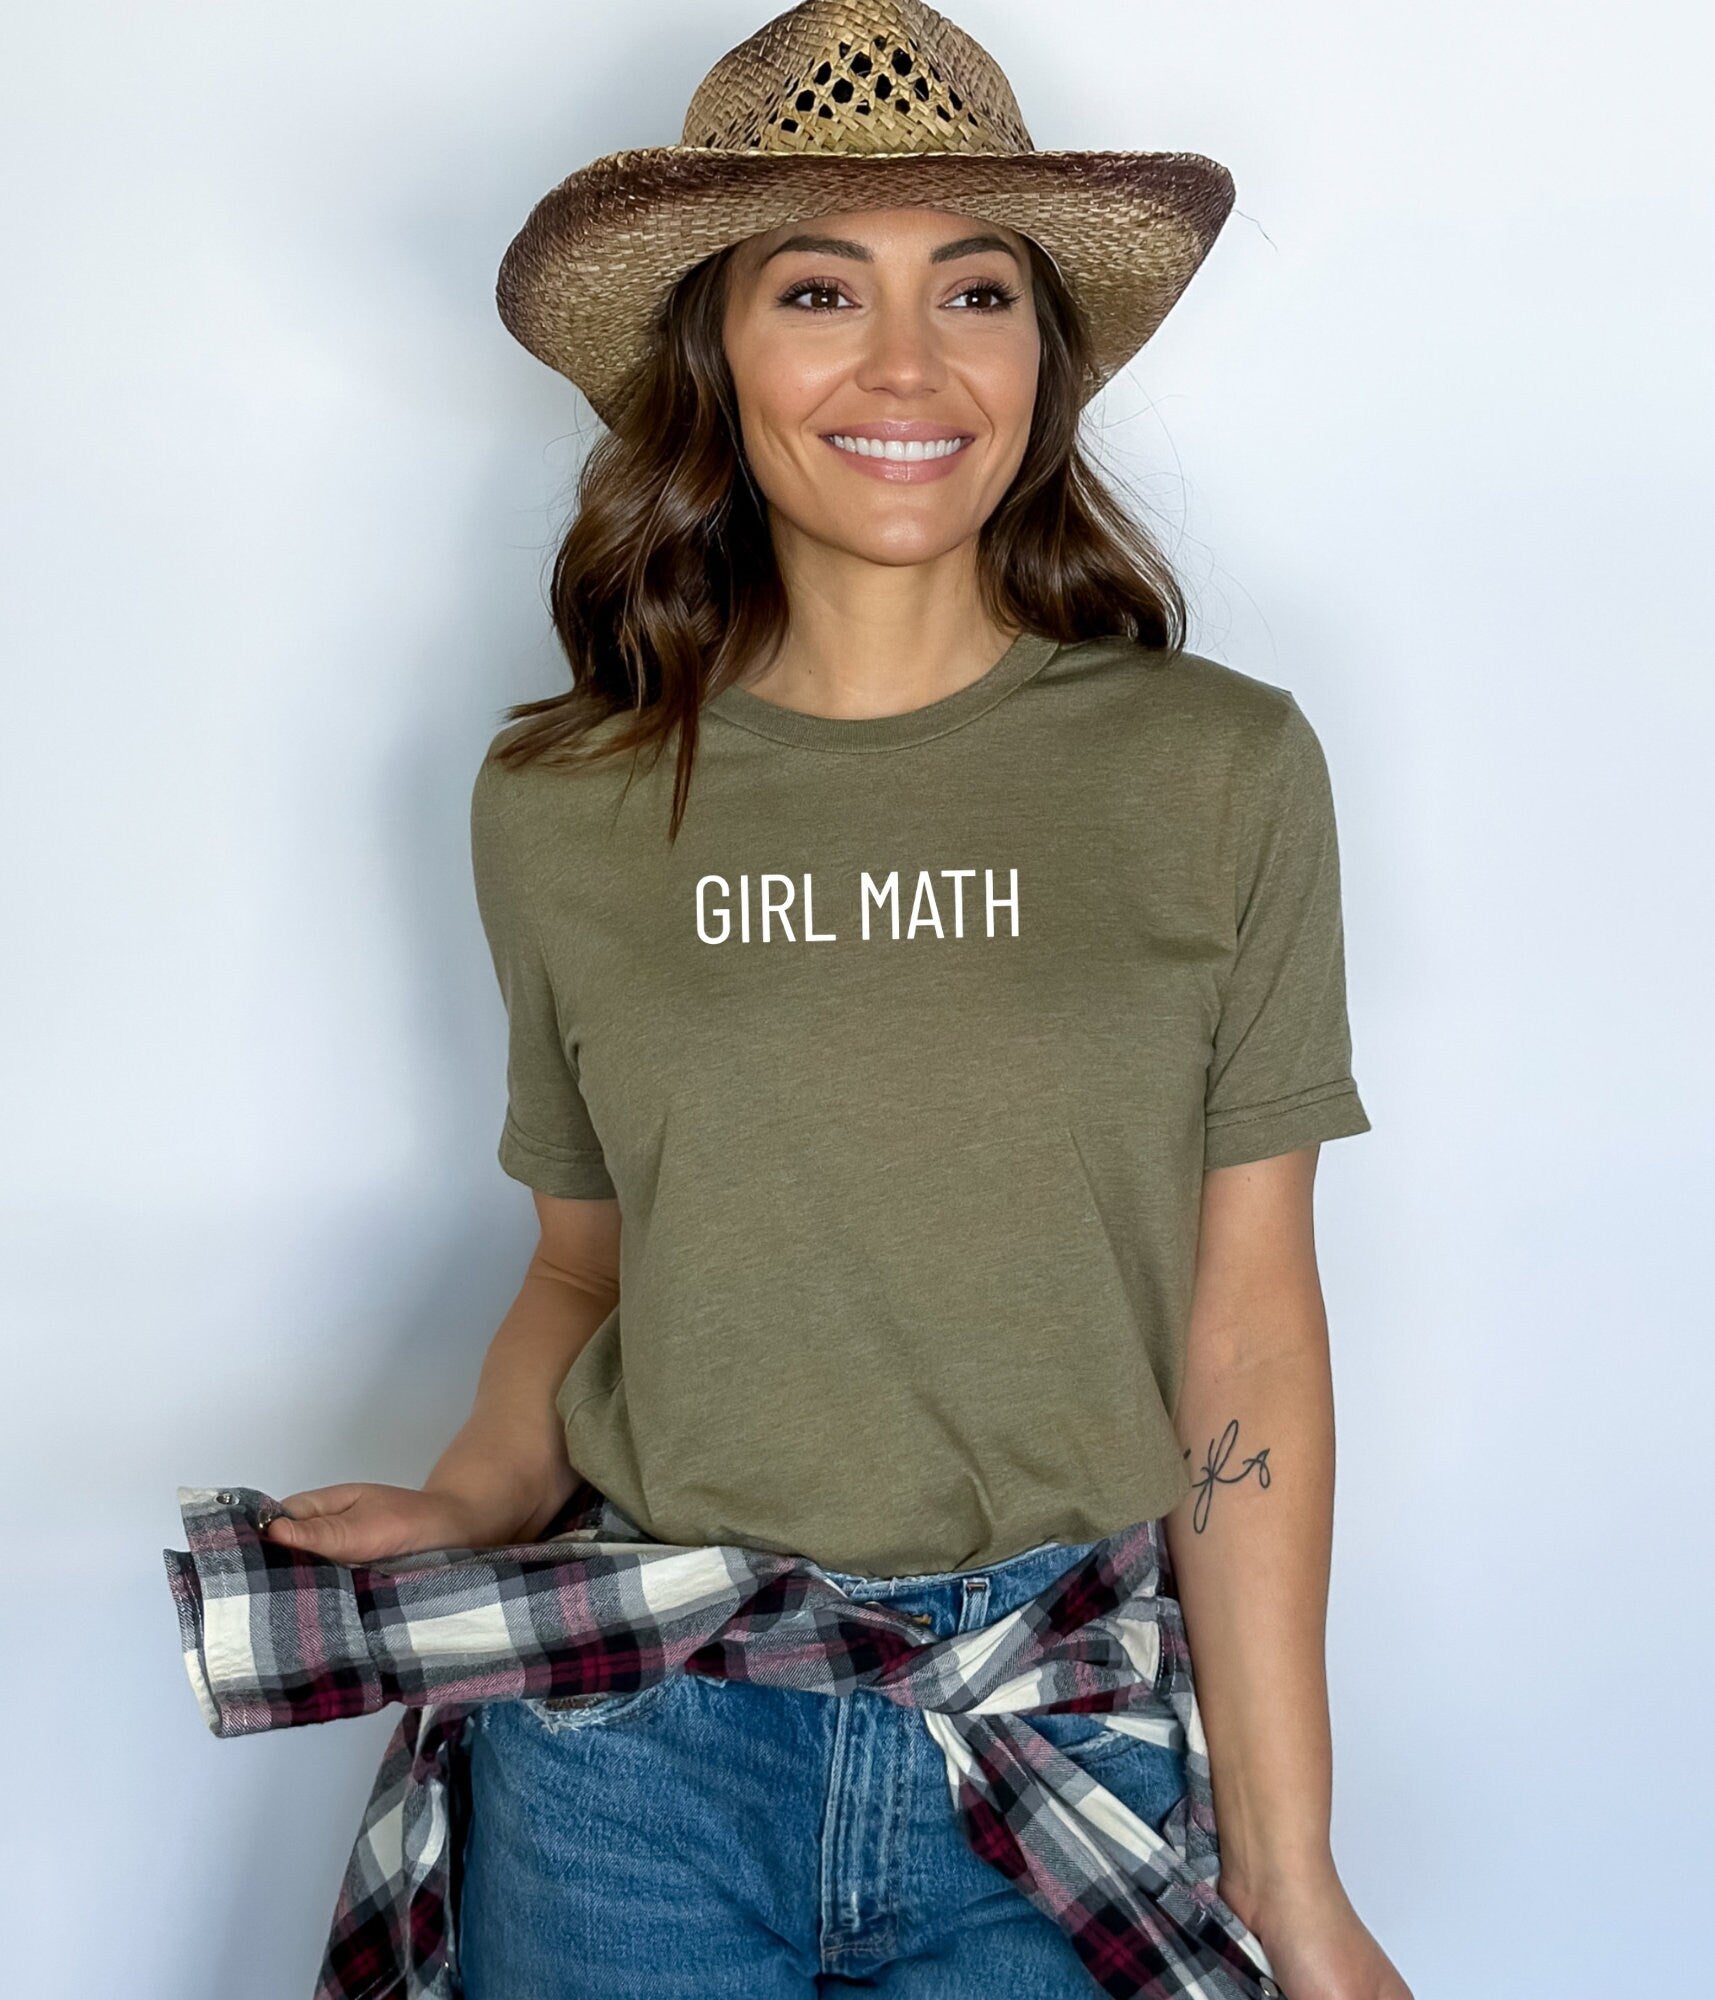 Girl Math Sweatshirt, Girl Math Tee, Girl Math, Crewneck Sweatshirt, Oversized Sweater, Comfy Sweater, Christian Sweater, Girl Math Hoodie